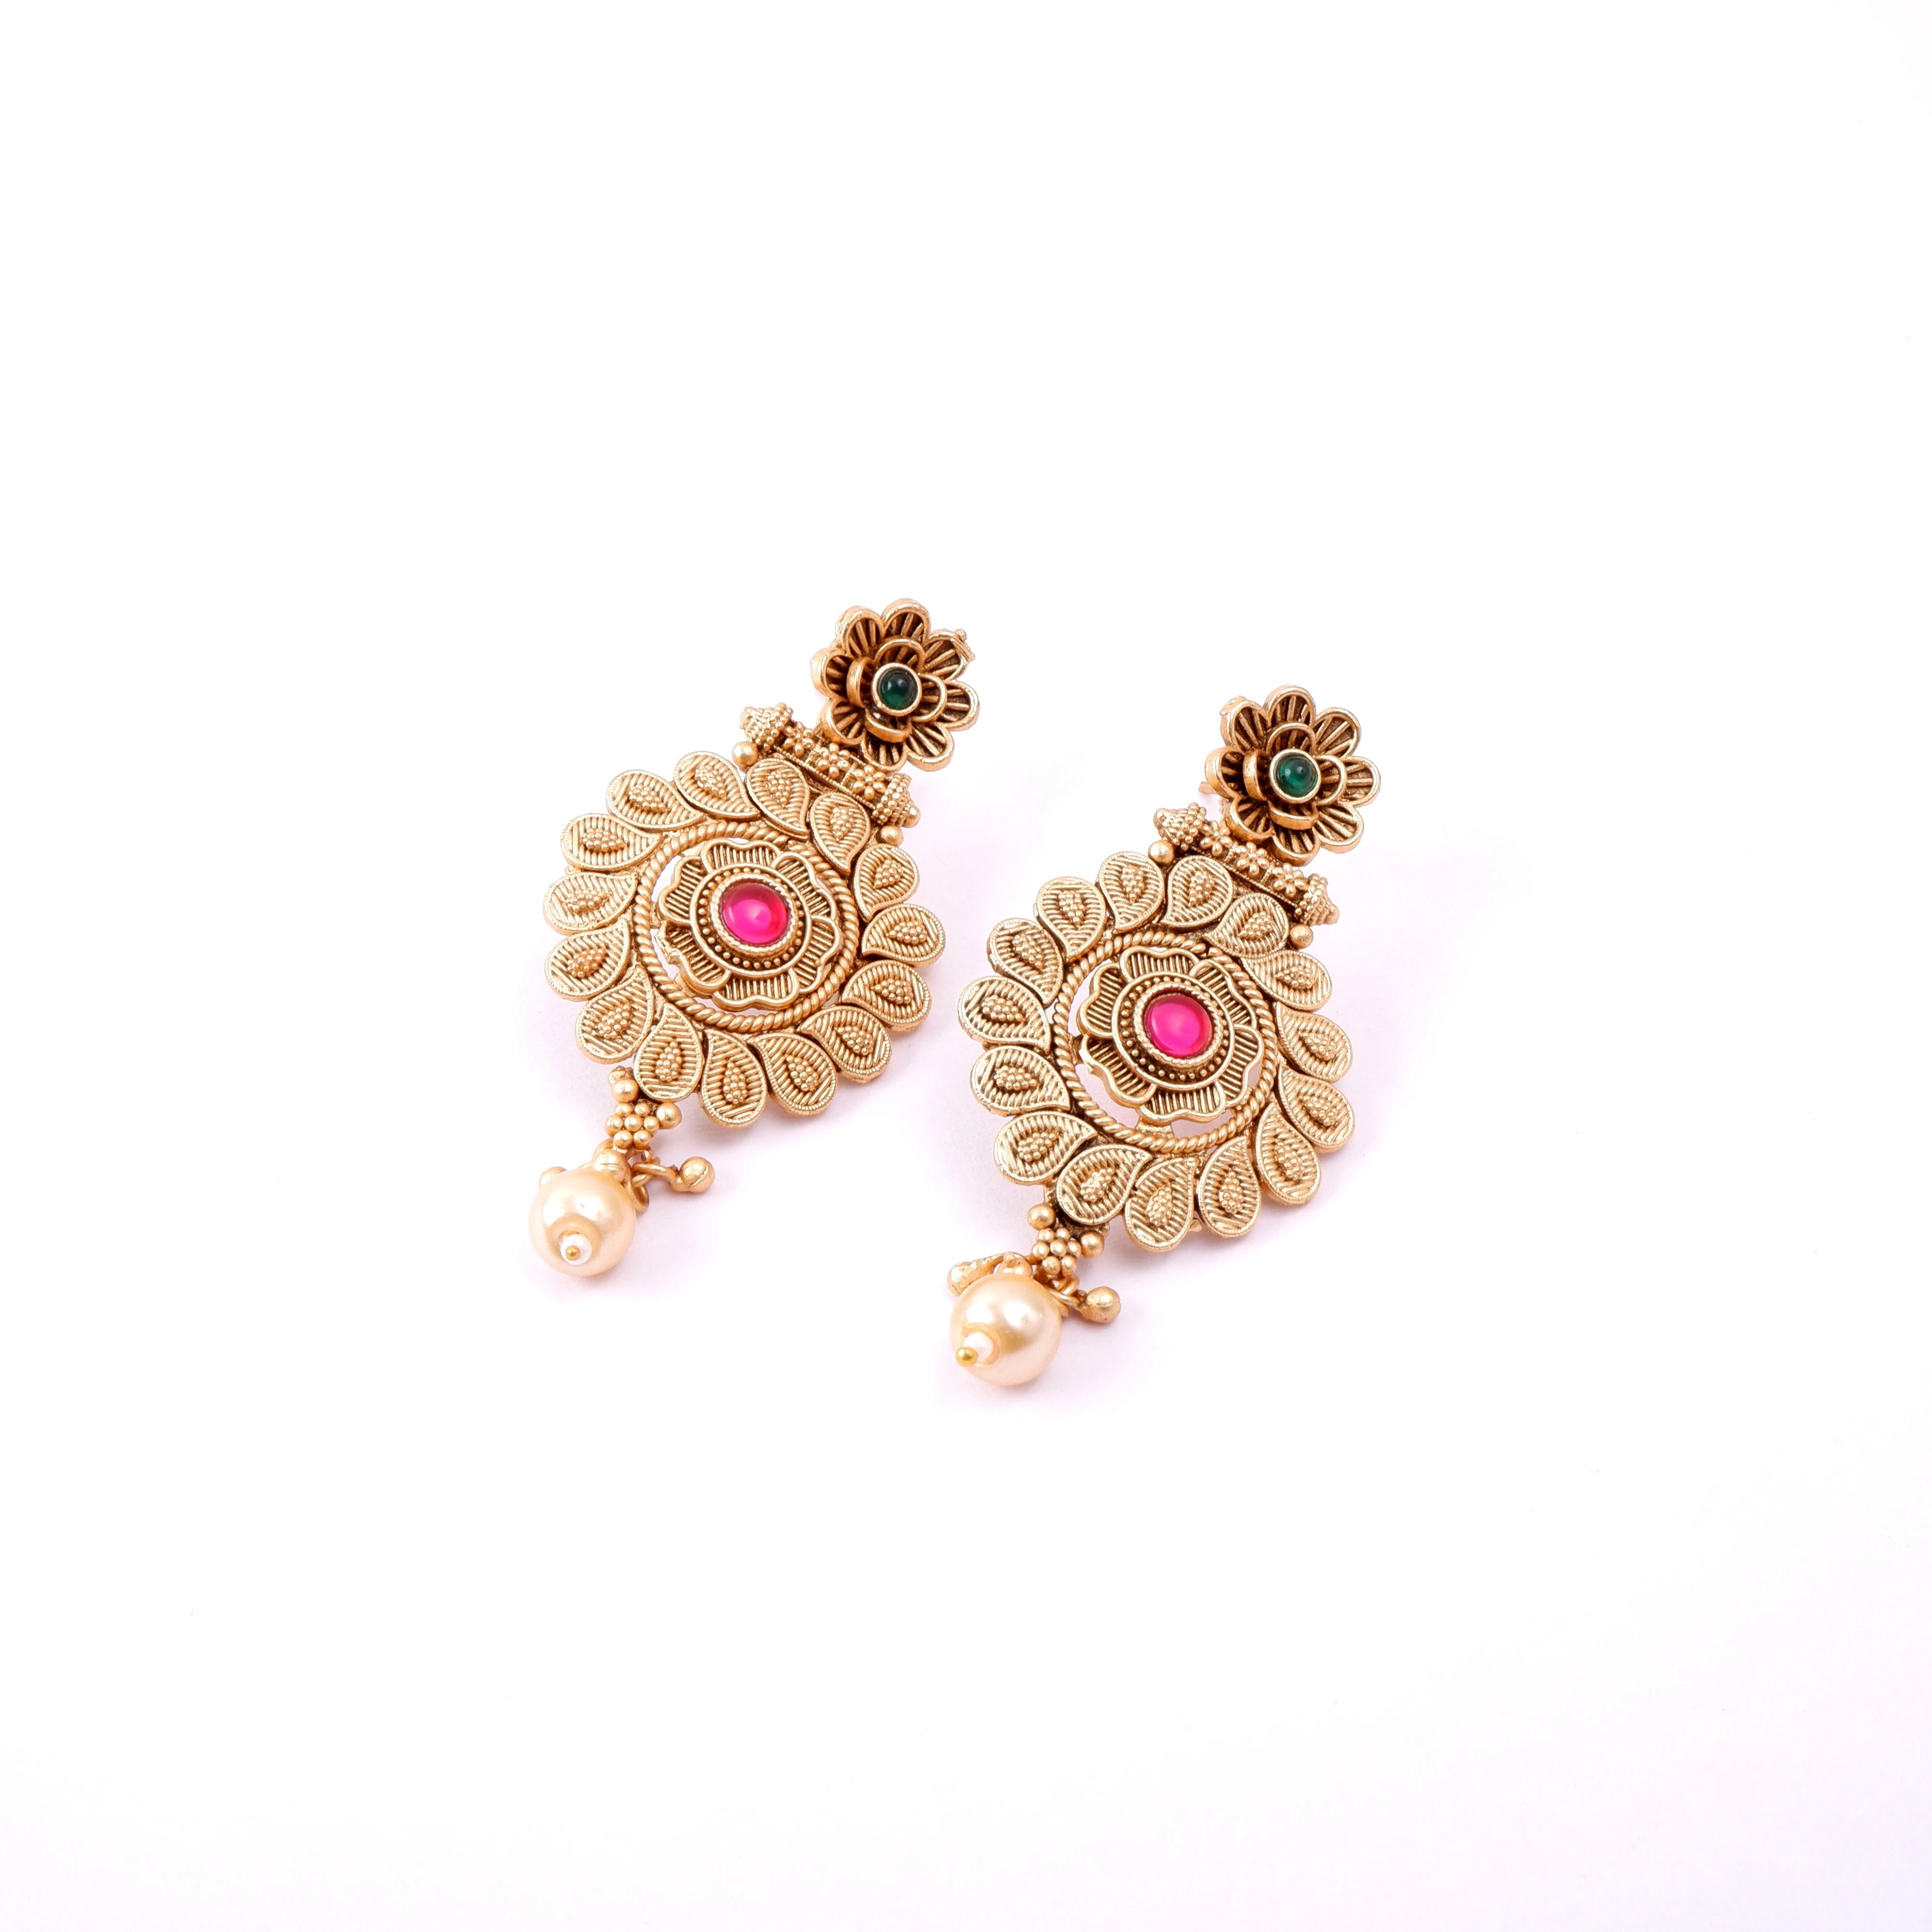 Ayatee Gold Plated earrings